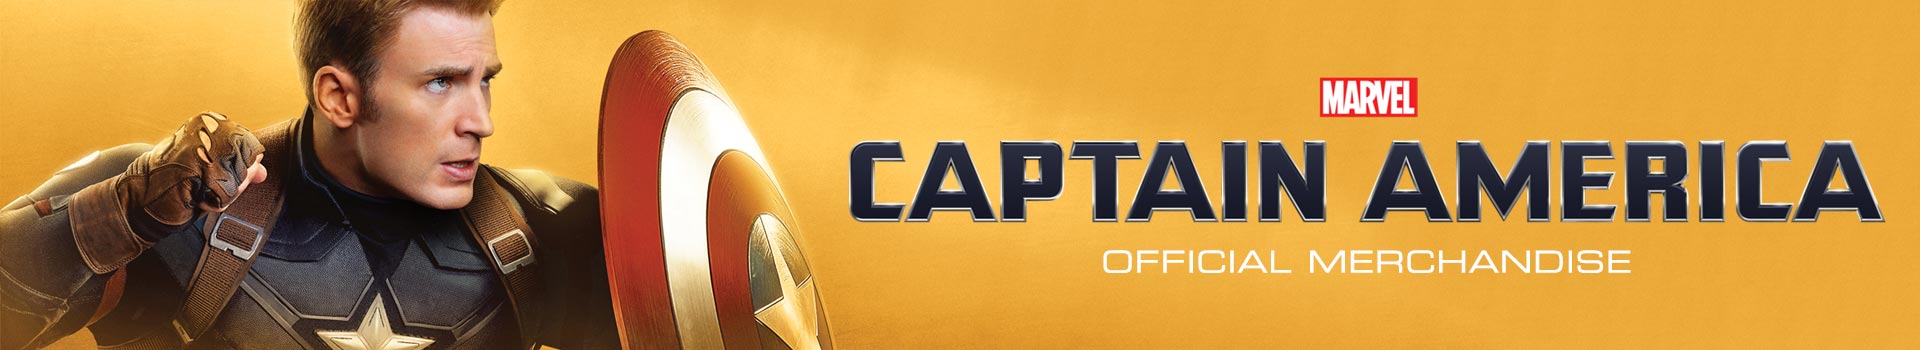 Captain America top banner